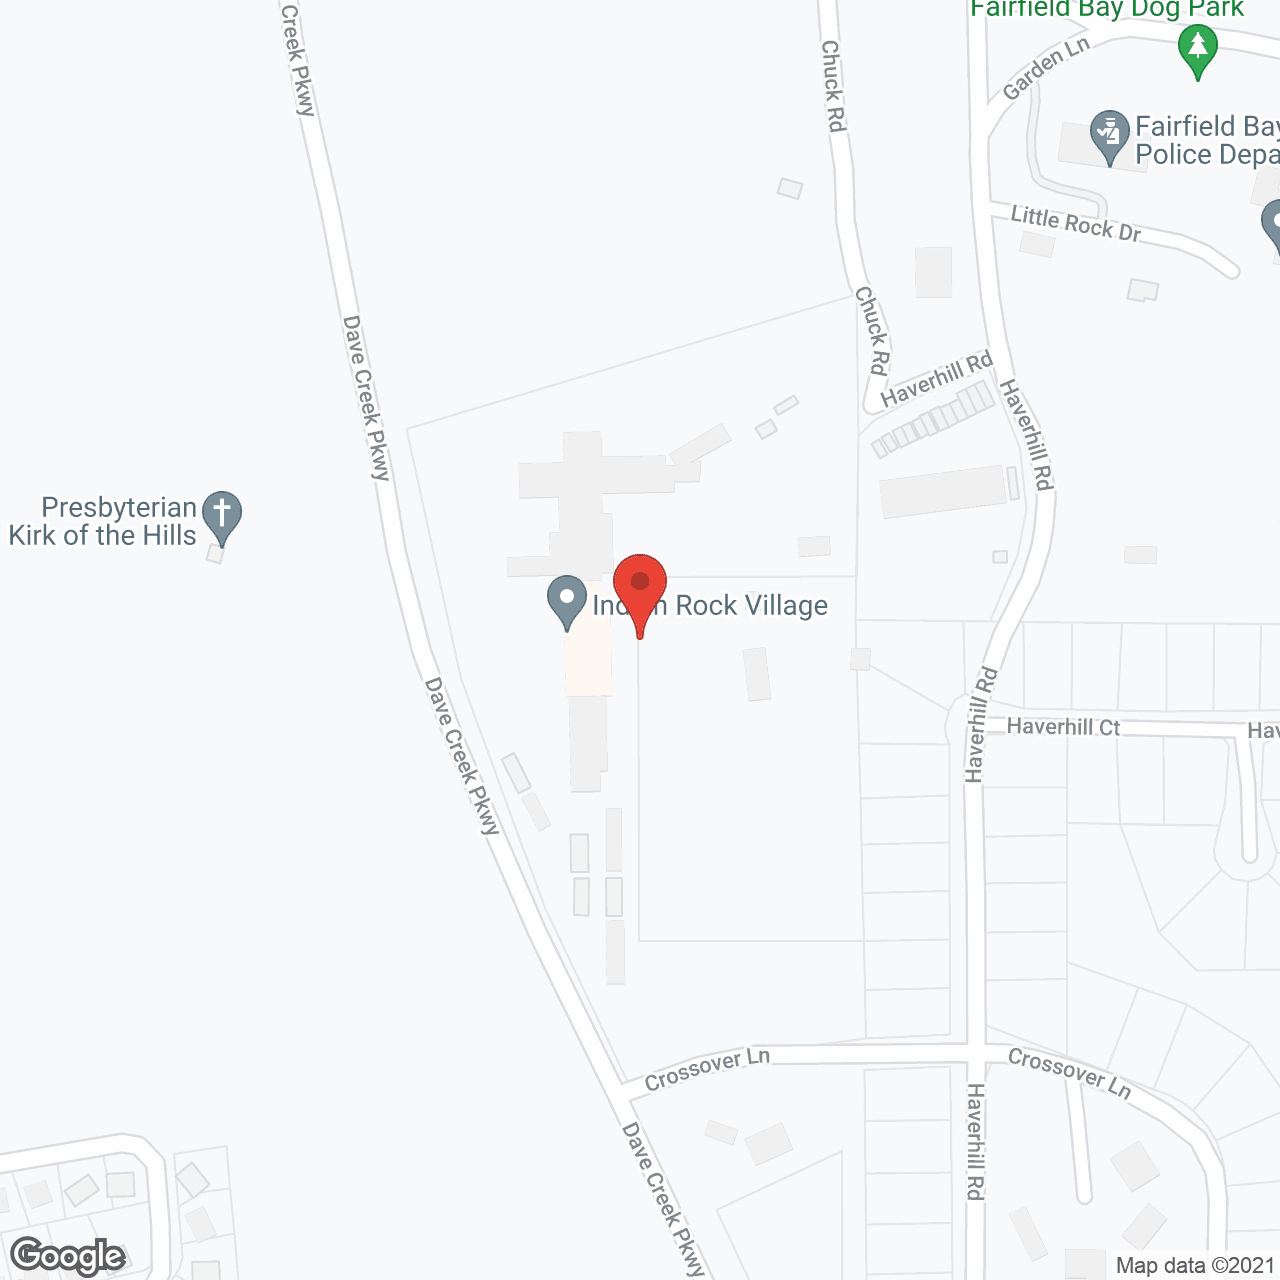 Indian Rock Village in google map